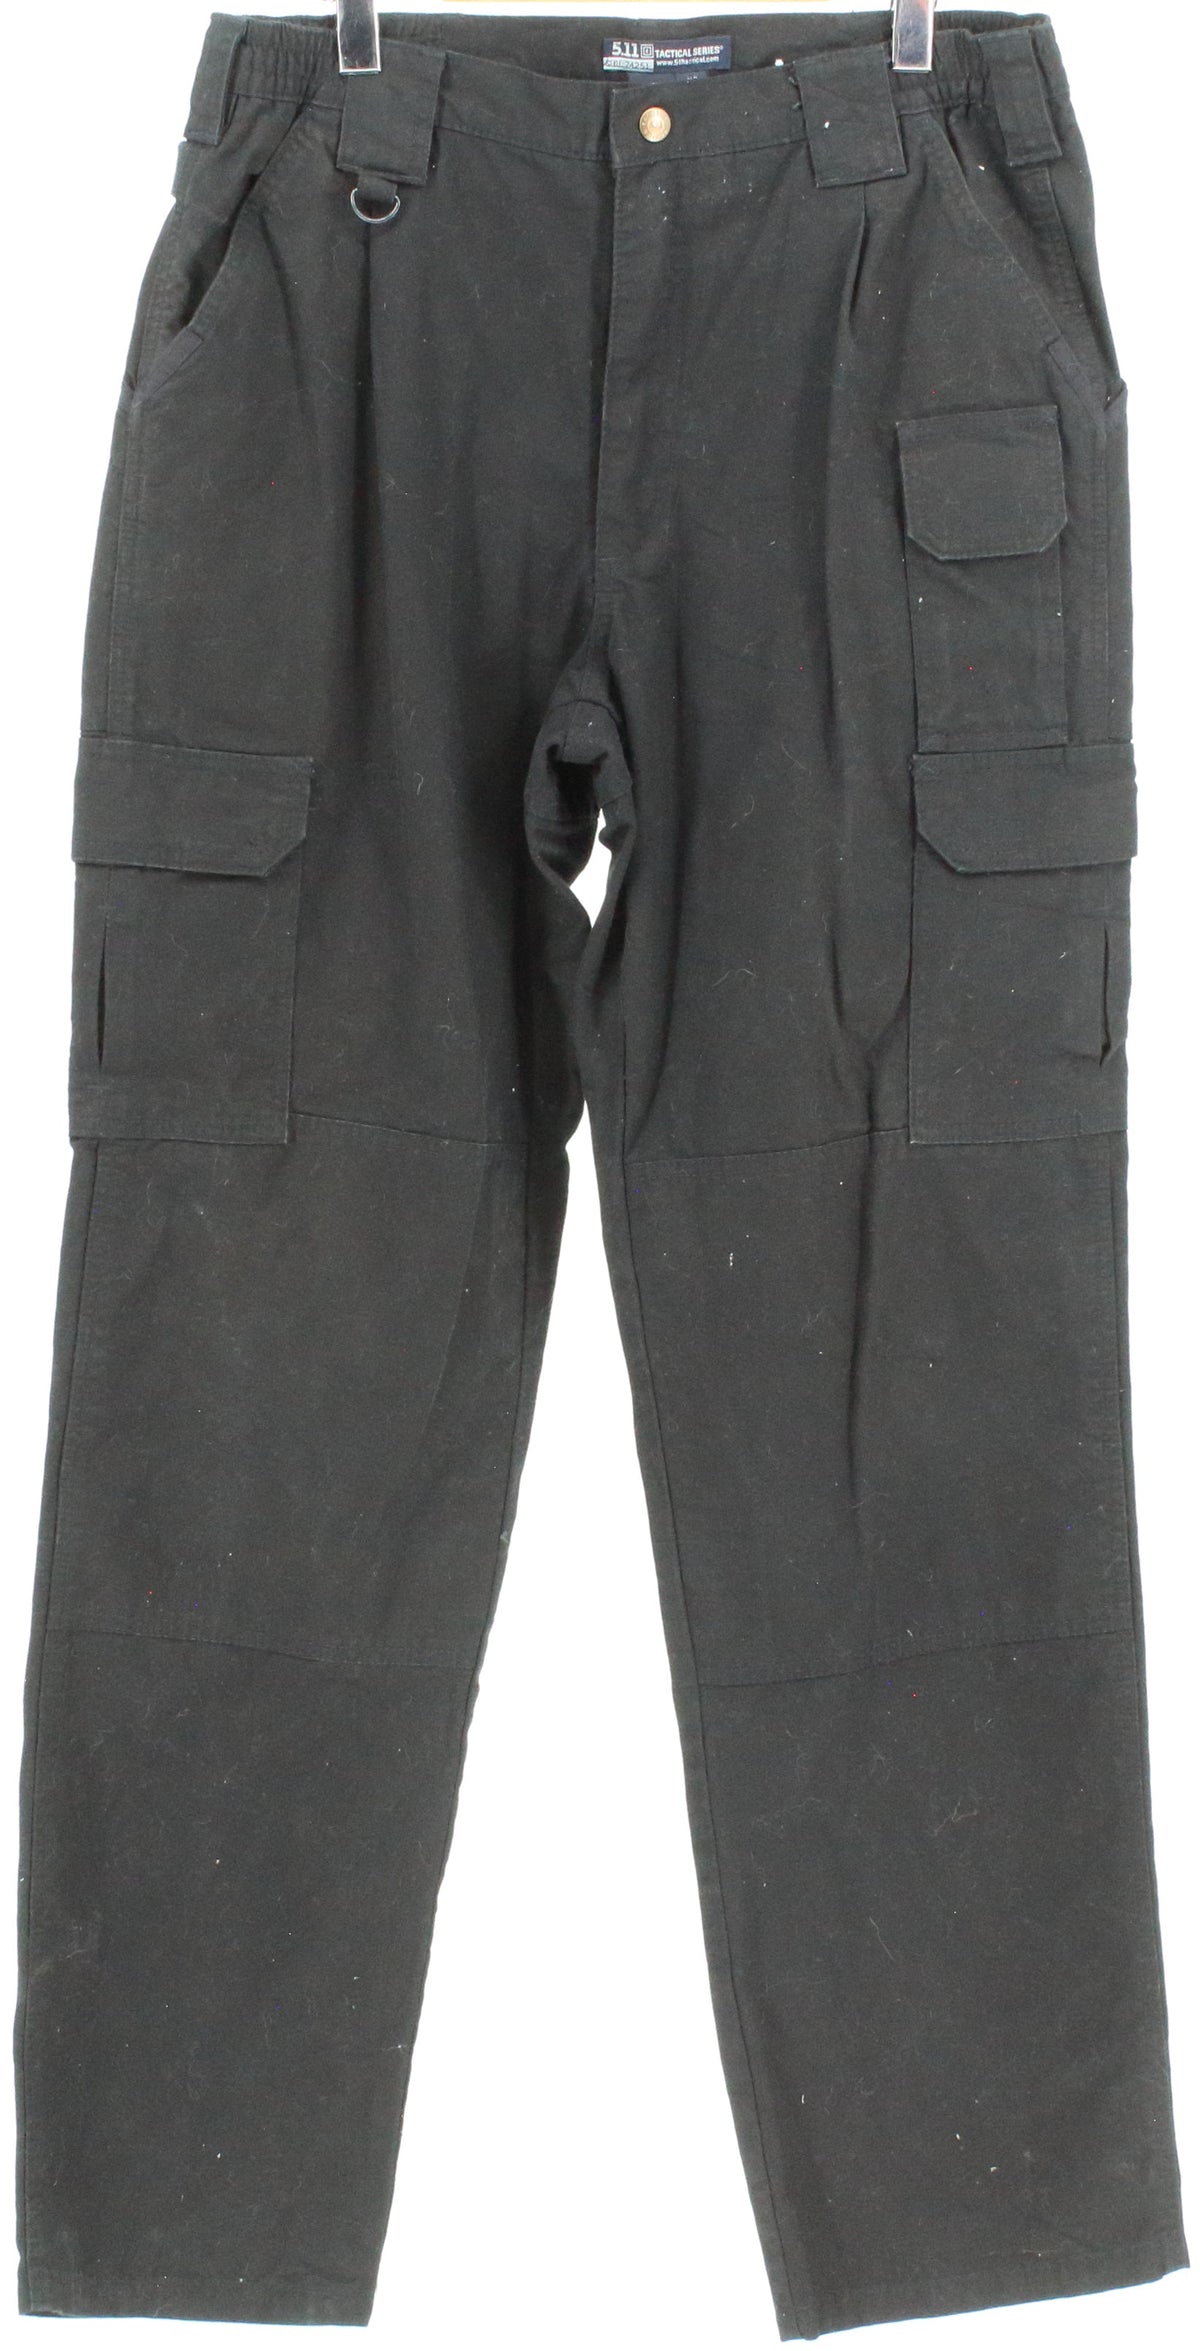 5.11 Tactical Series Black Cargo Pants